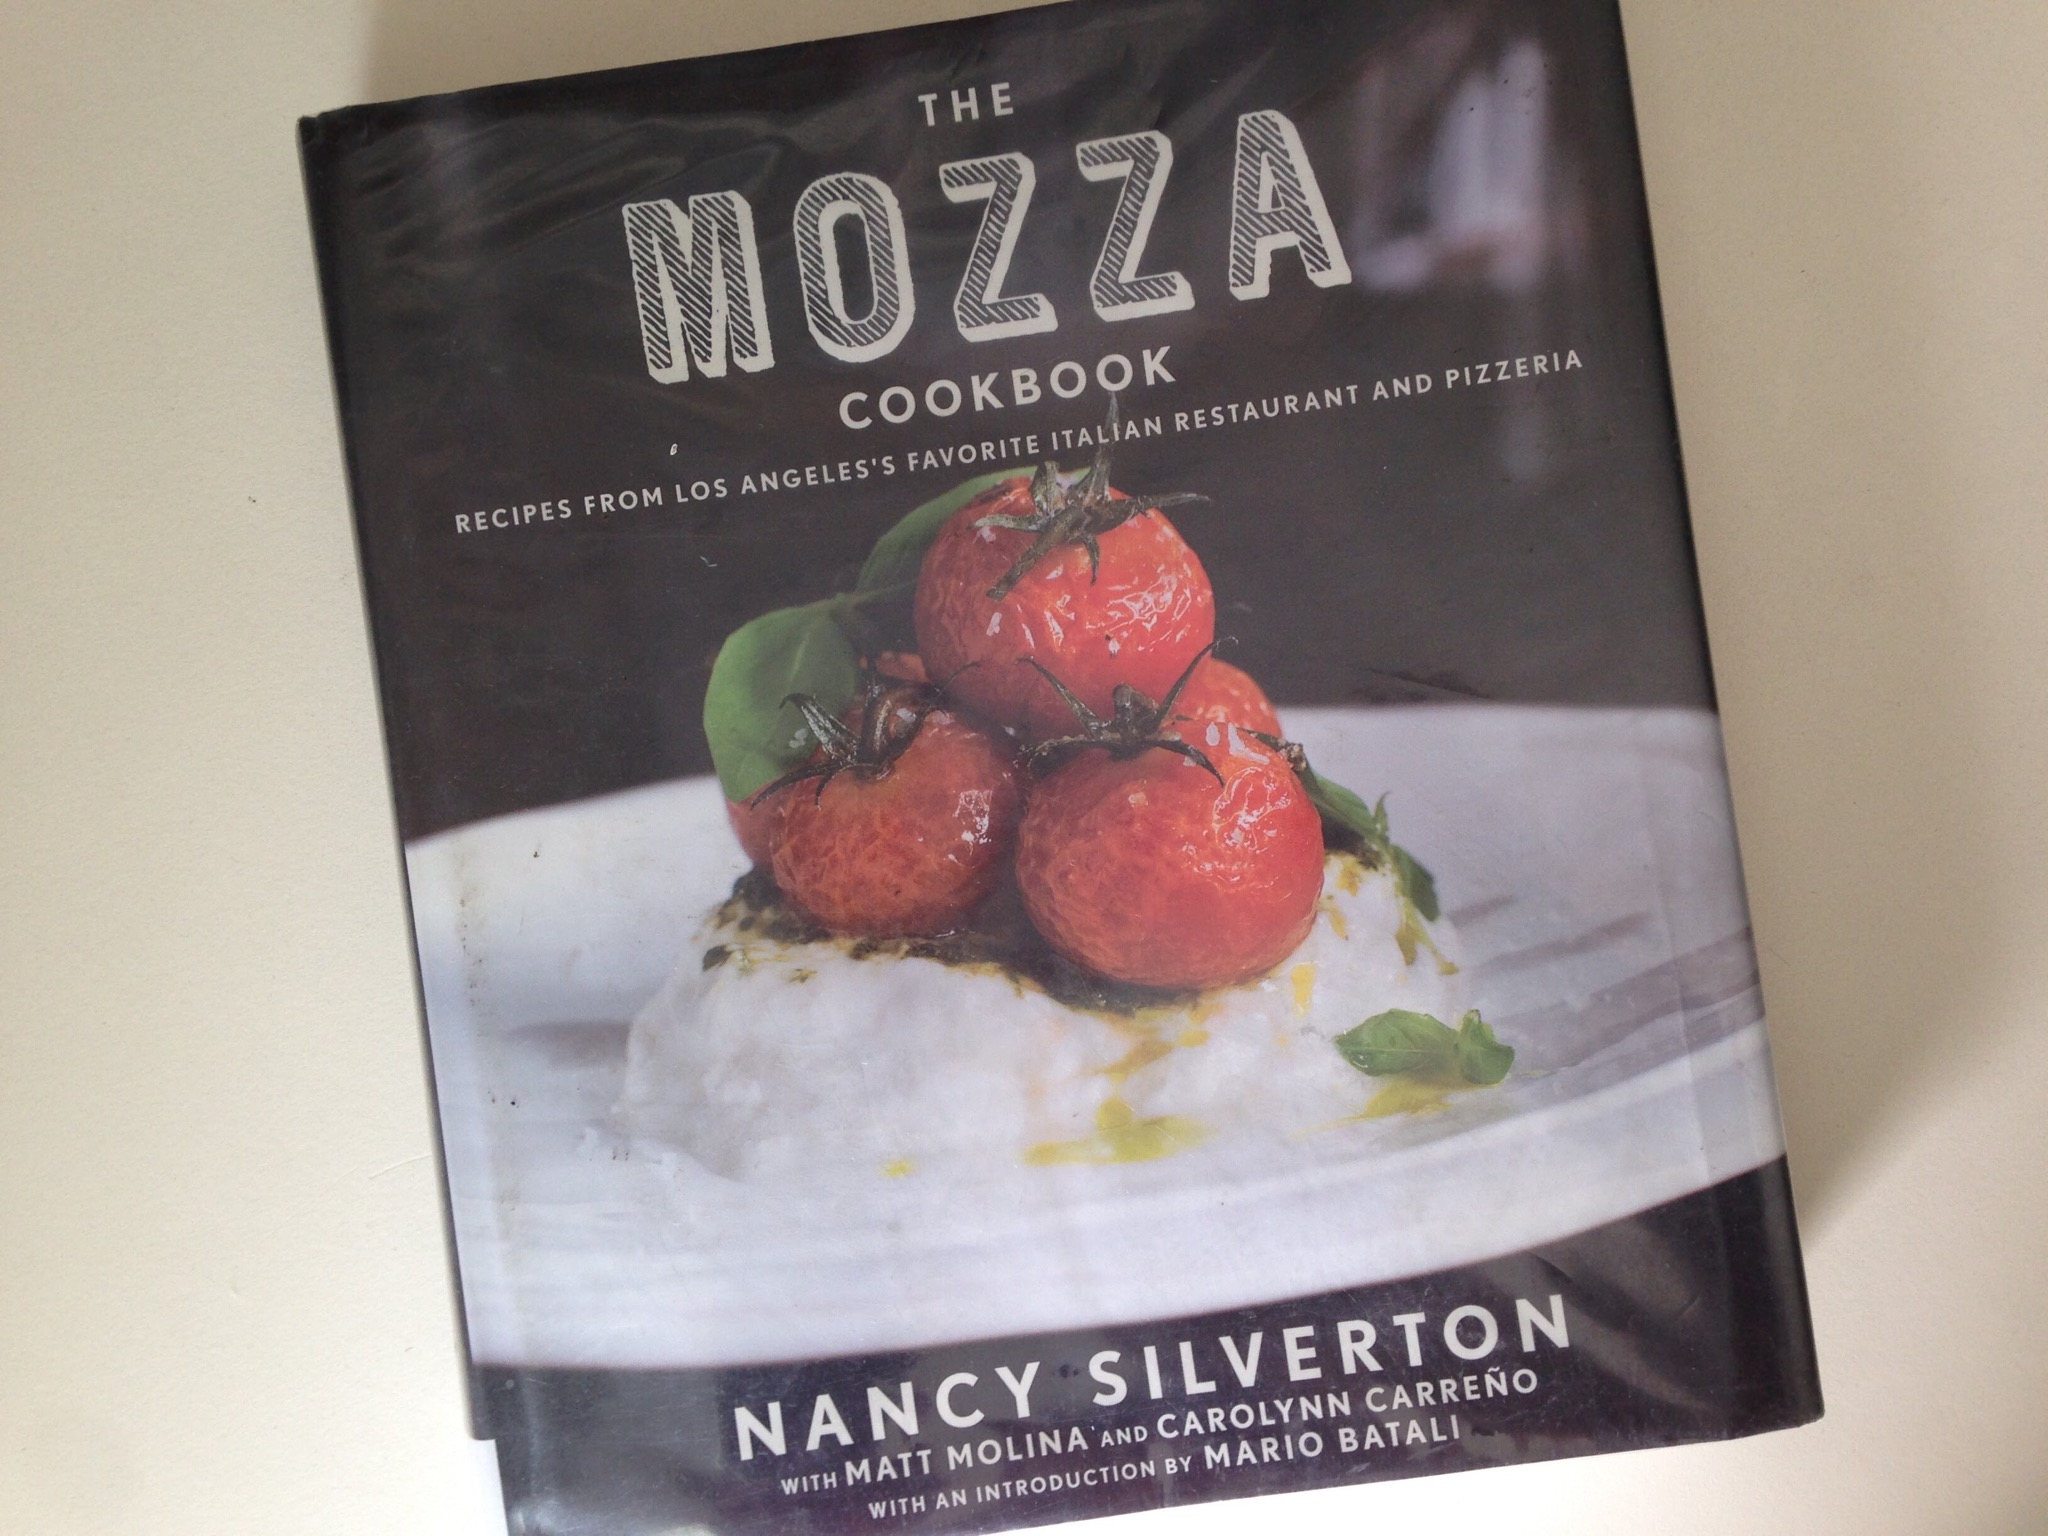 Mozza cookbook